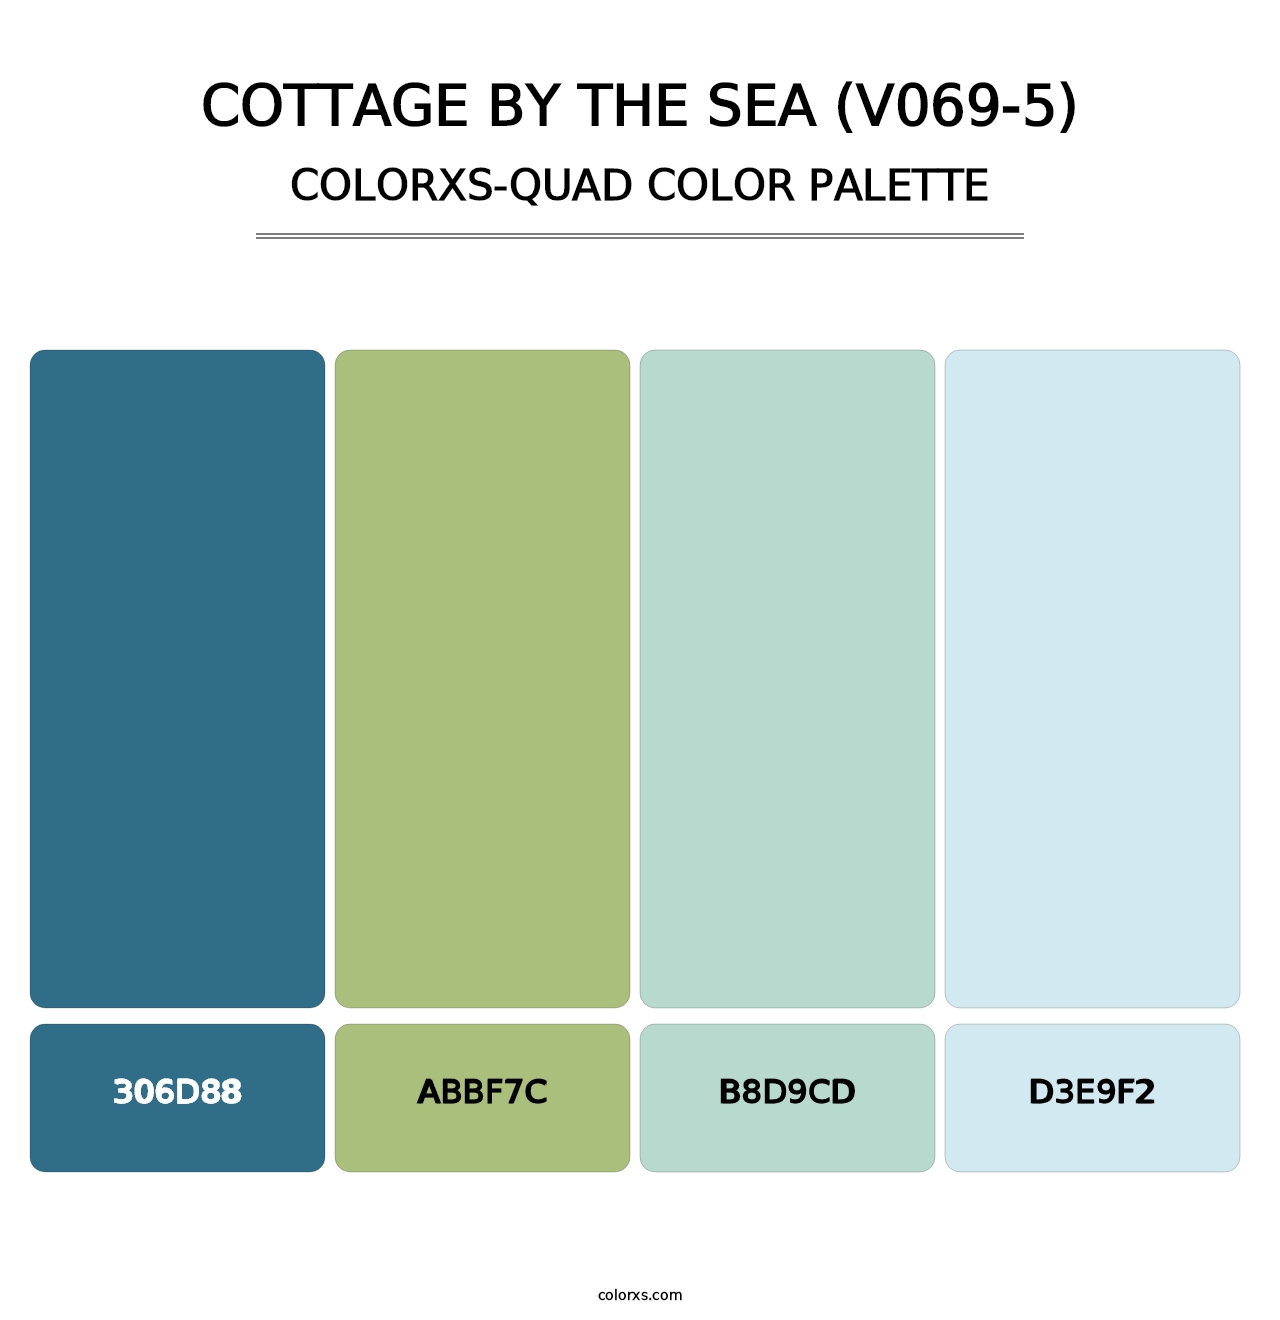 Cottage by the Sea (V069-5) - Colorxs Quad Palette